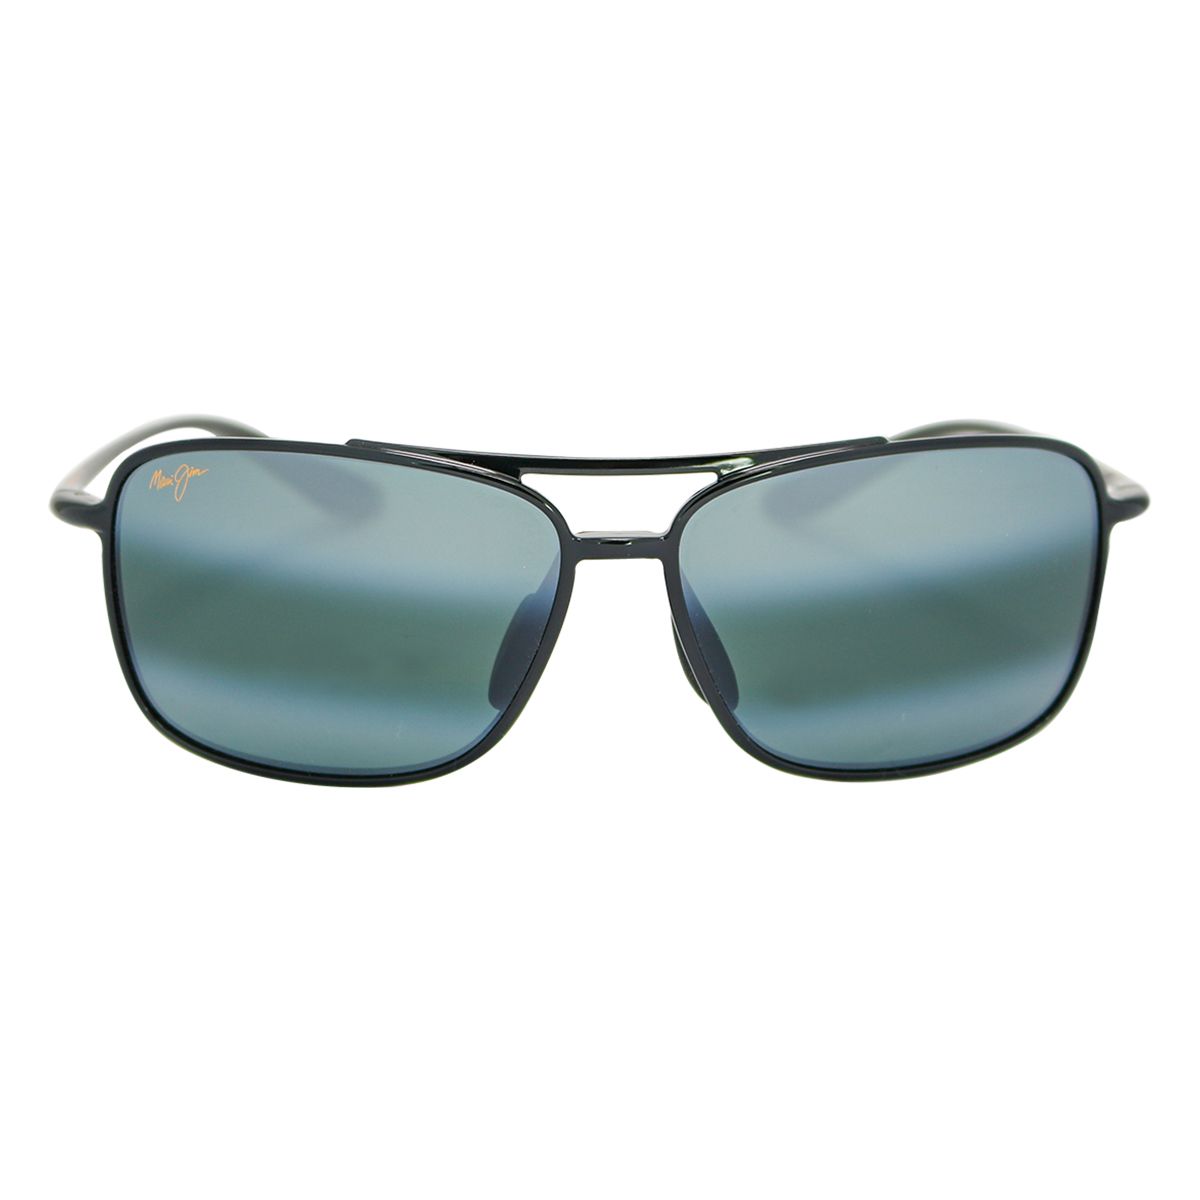 MJ437 Square Sunglasses 2 - size 61